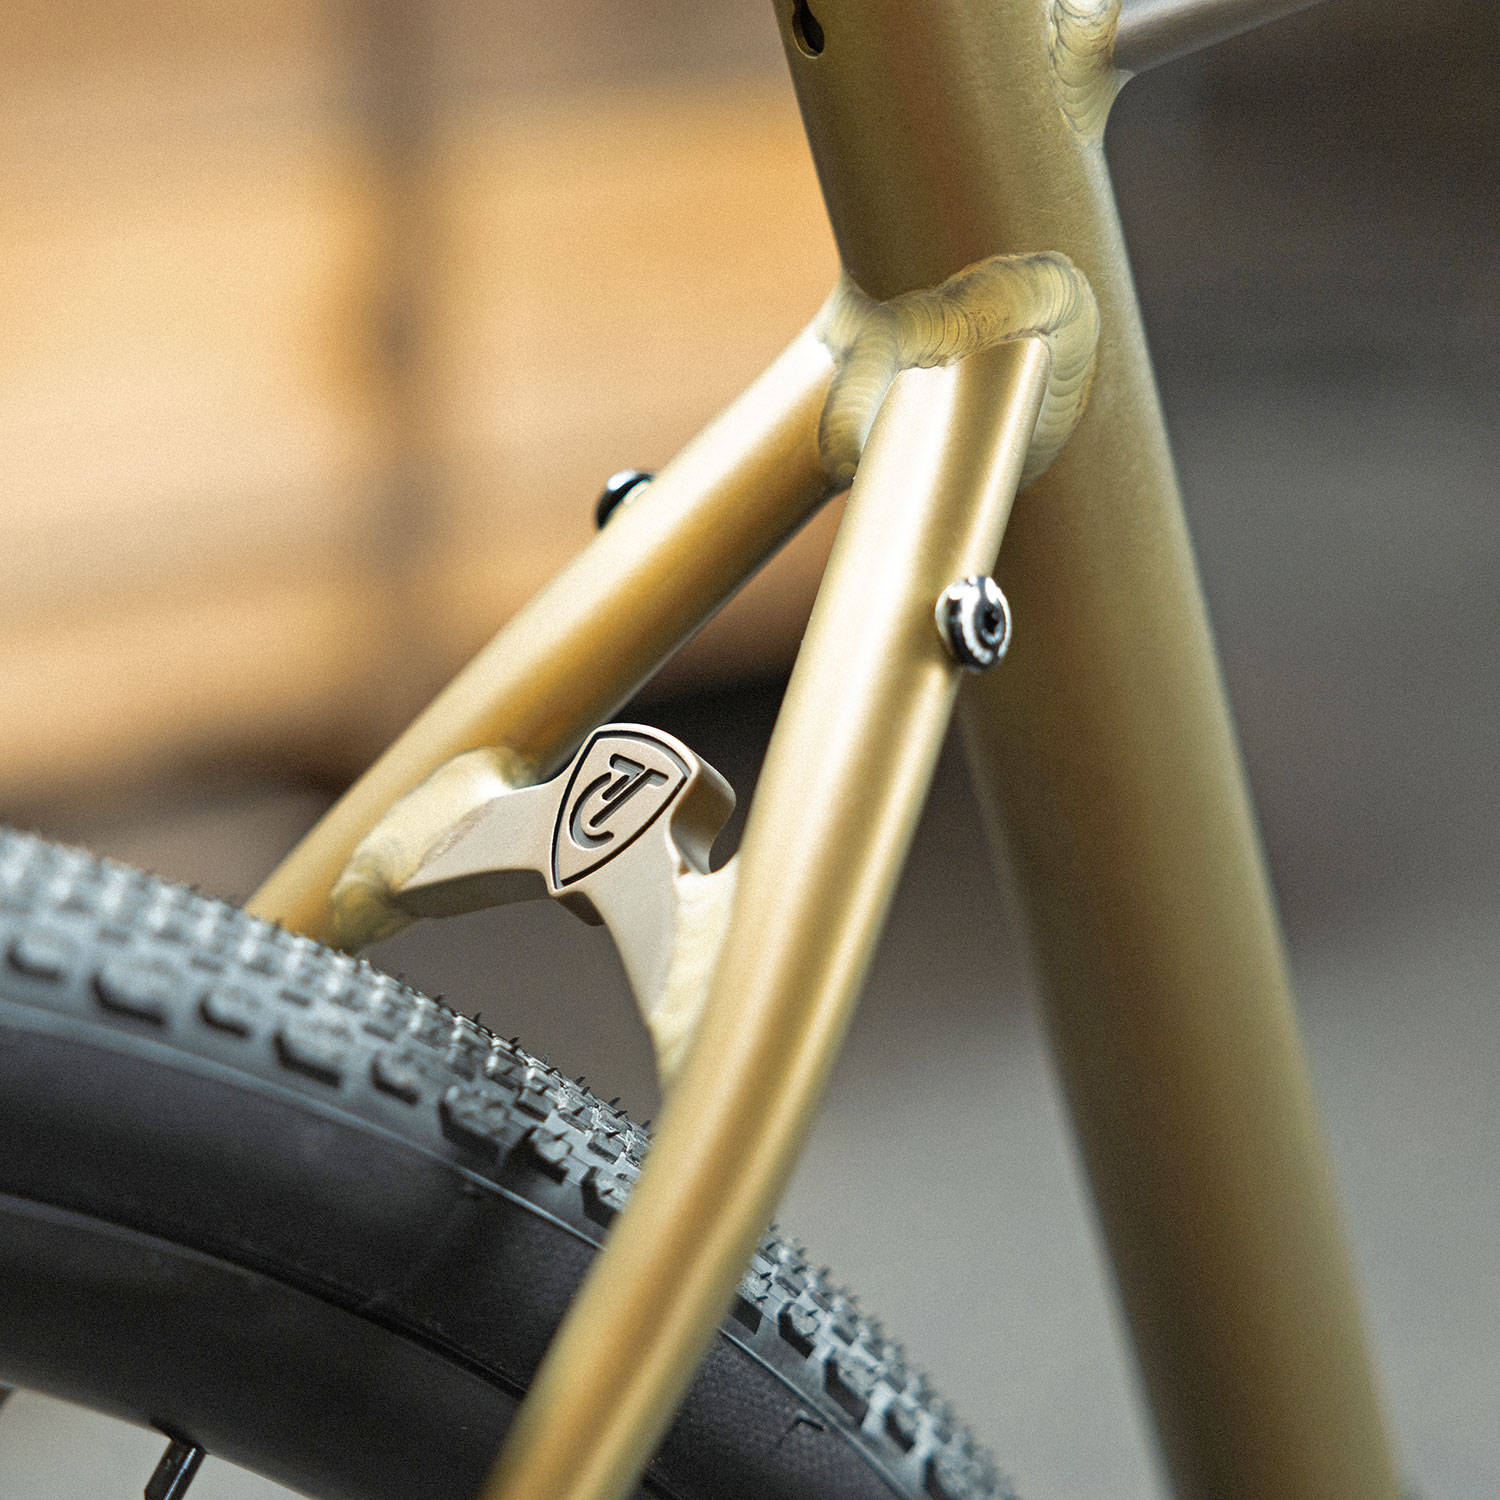 Titici Alloi Y bicicleta de gravel de aluminio con acabado anodizado duro GHA Silver, detalle del tirante del asiento